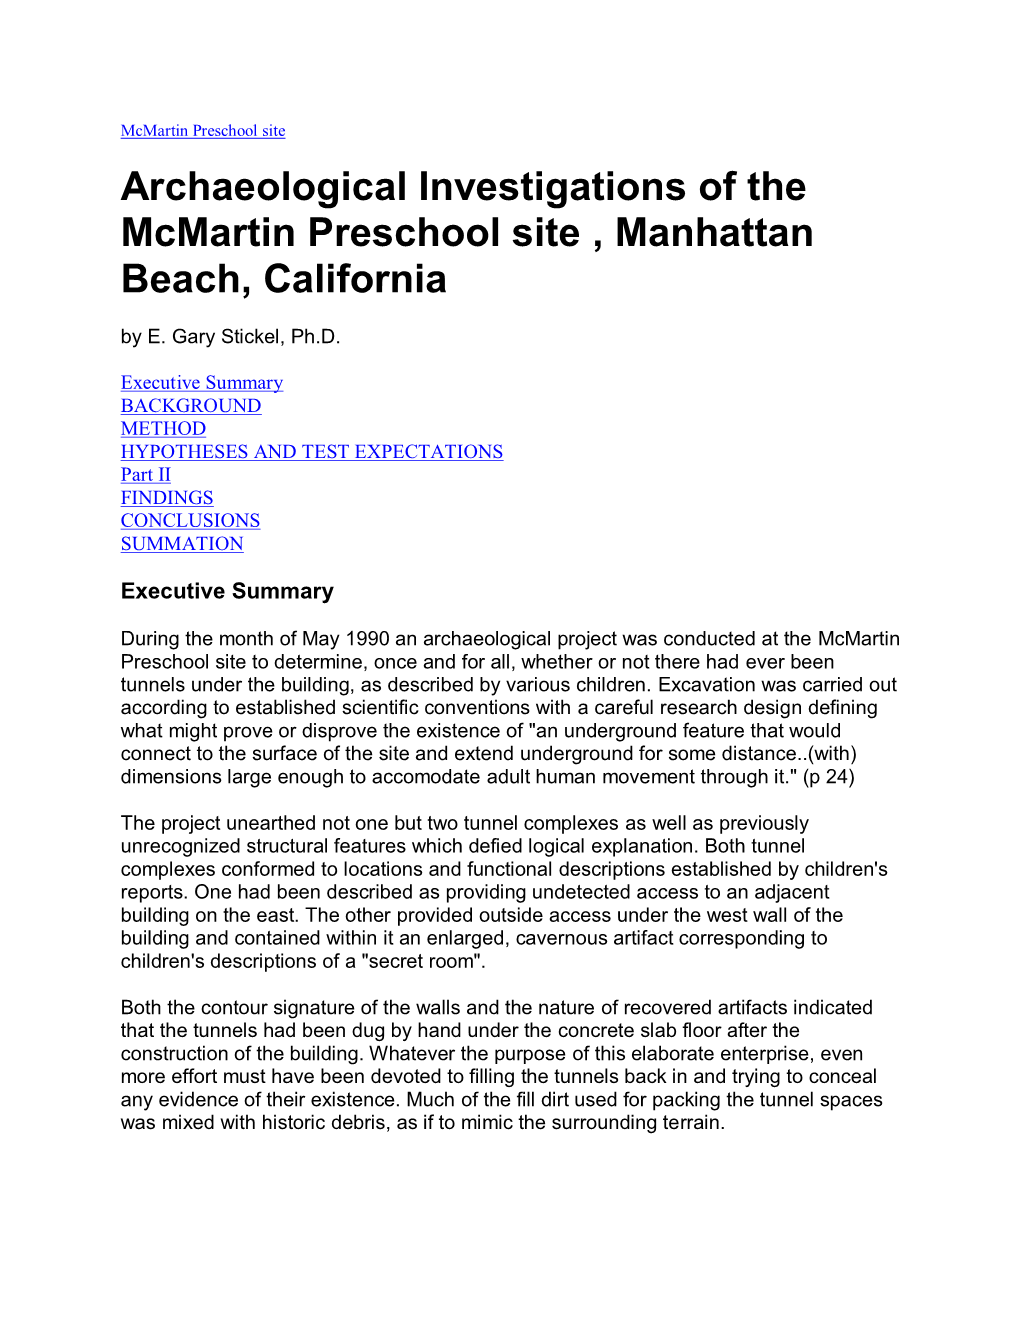 Archaeological Investigations of the Mcmartin Preschool Site E. Gary